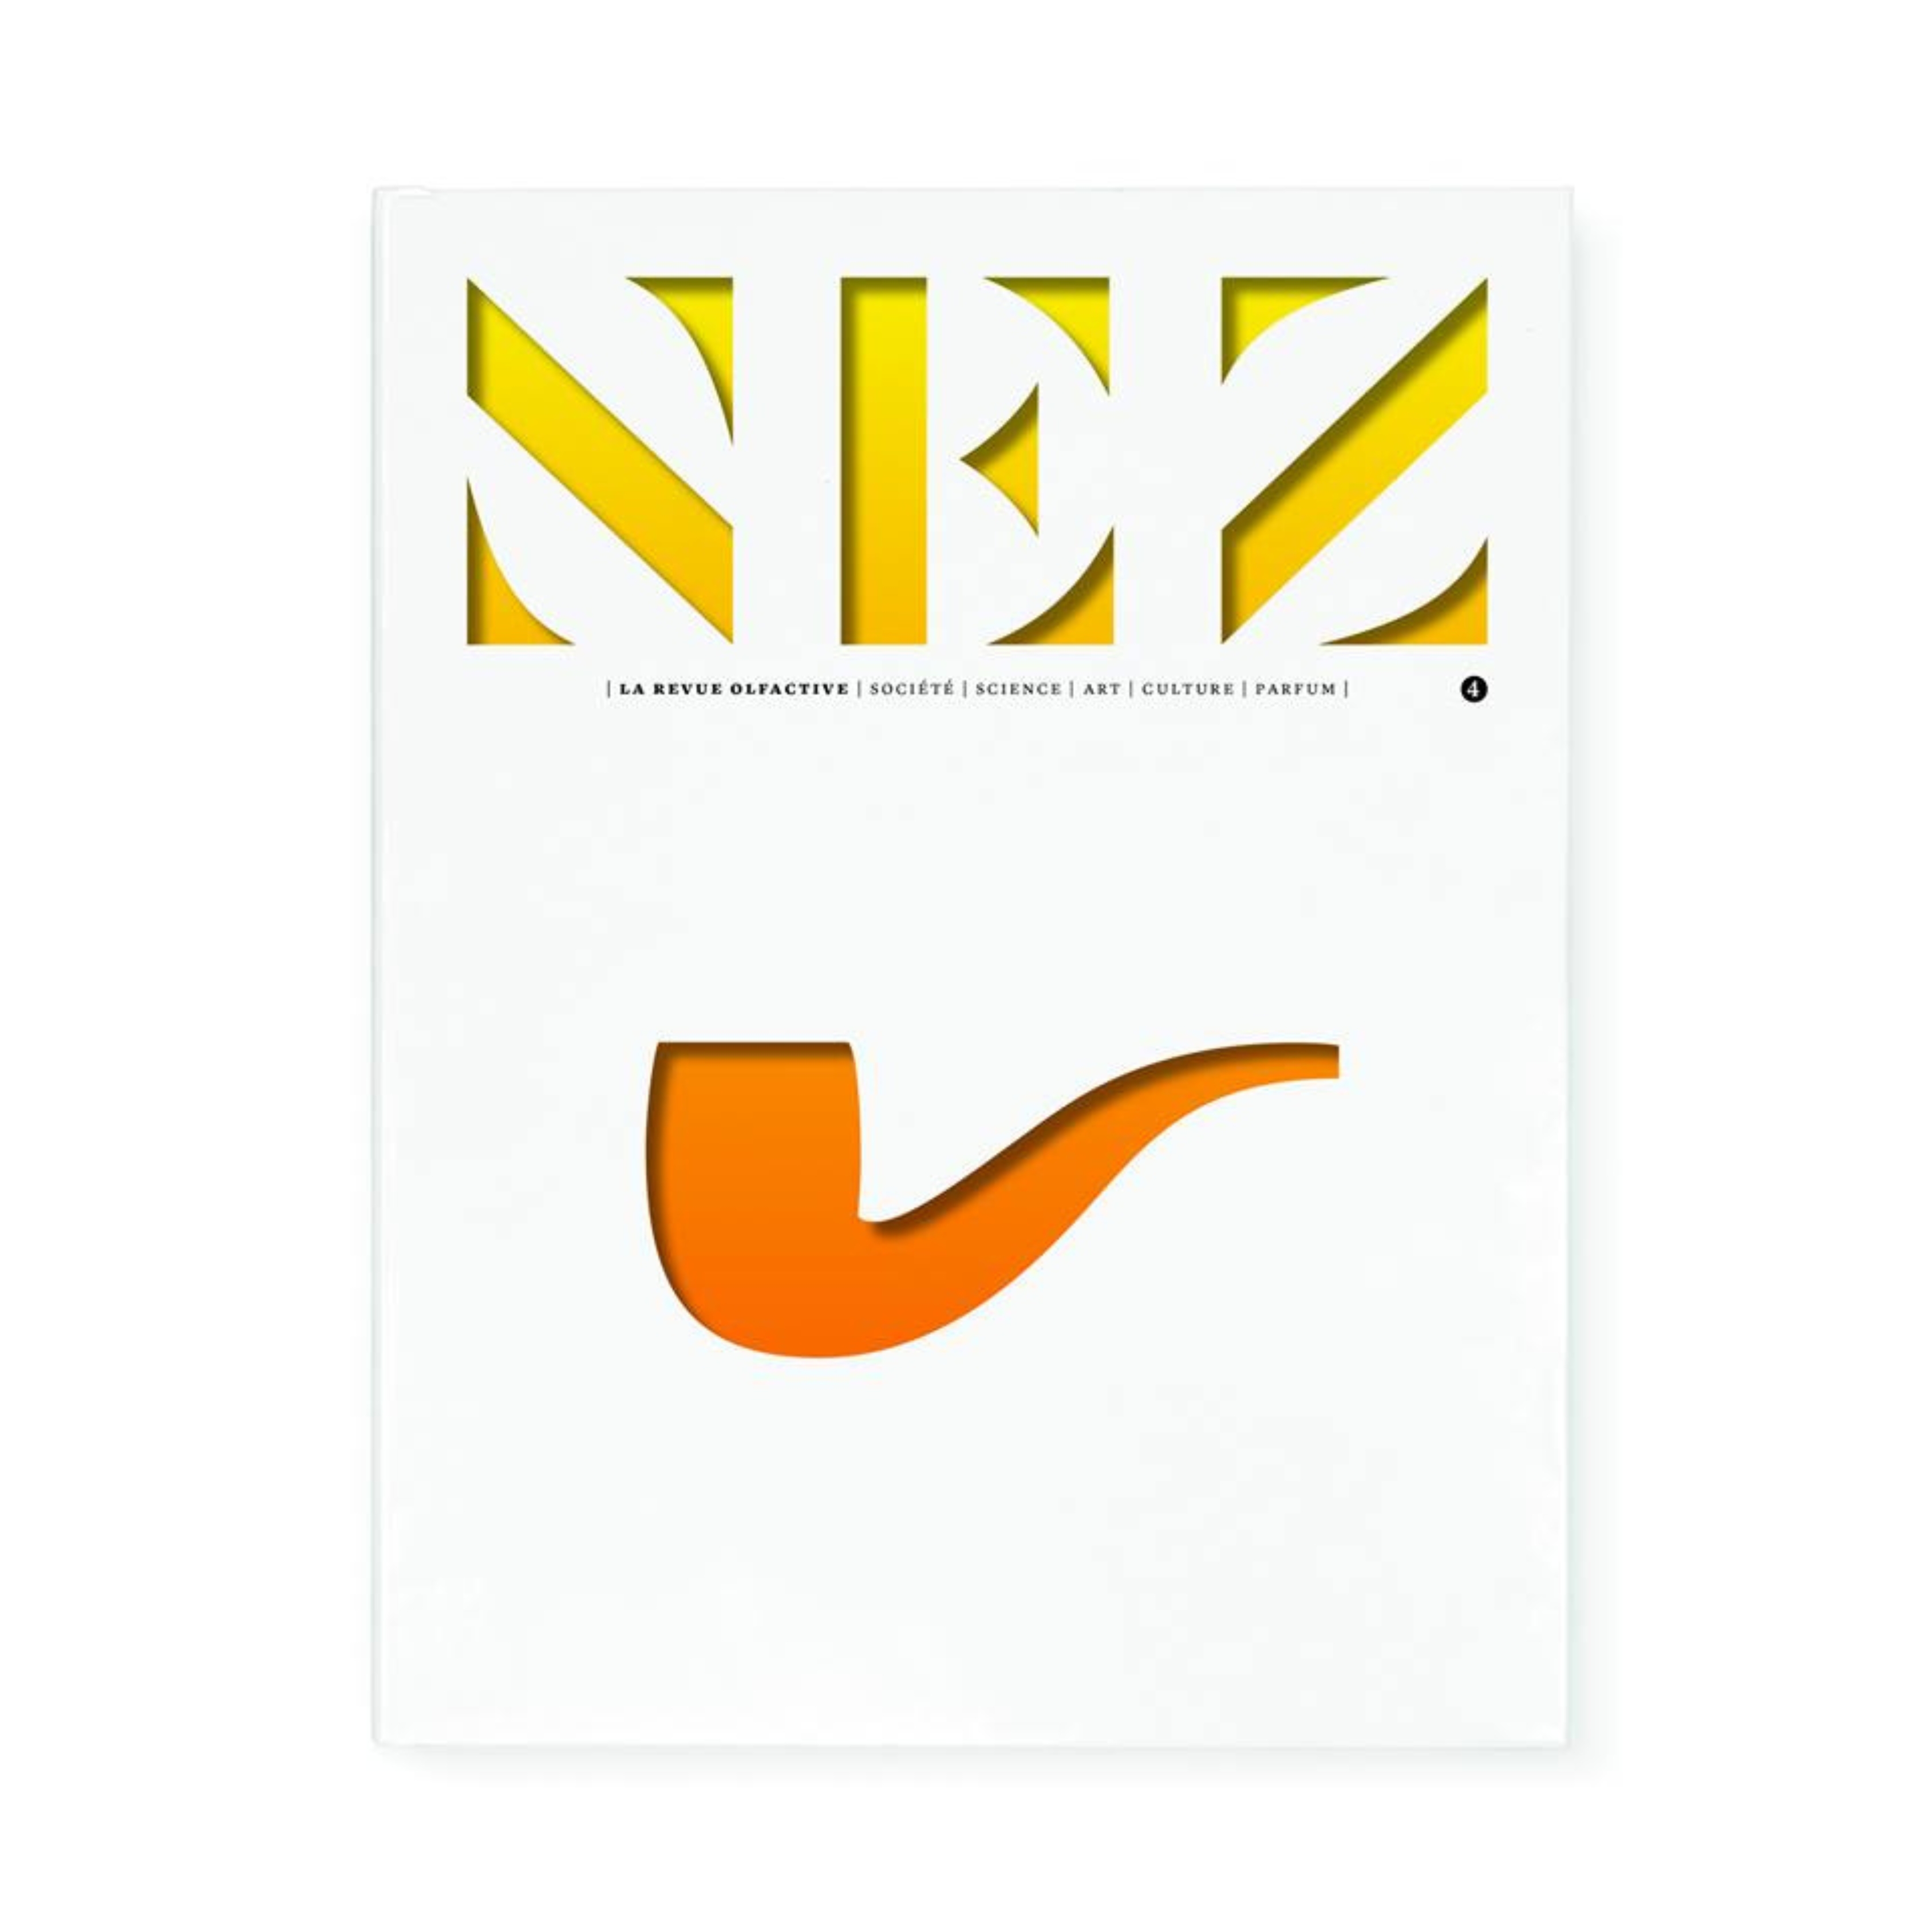 Nez – La rivista olfattiva